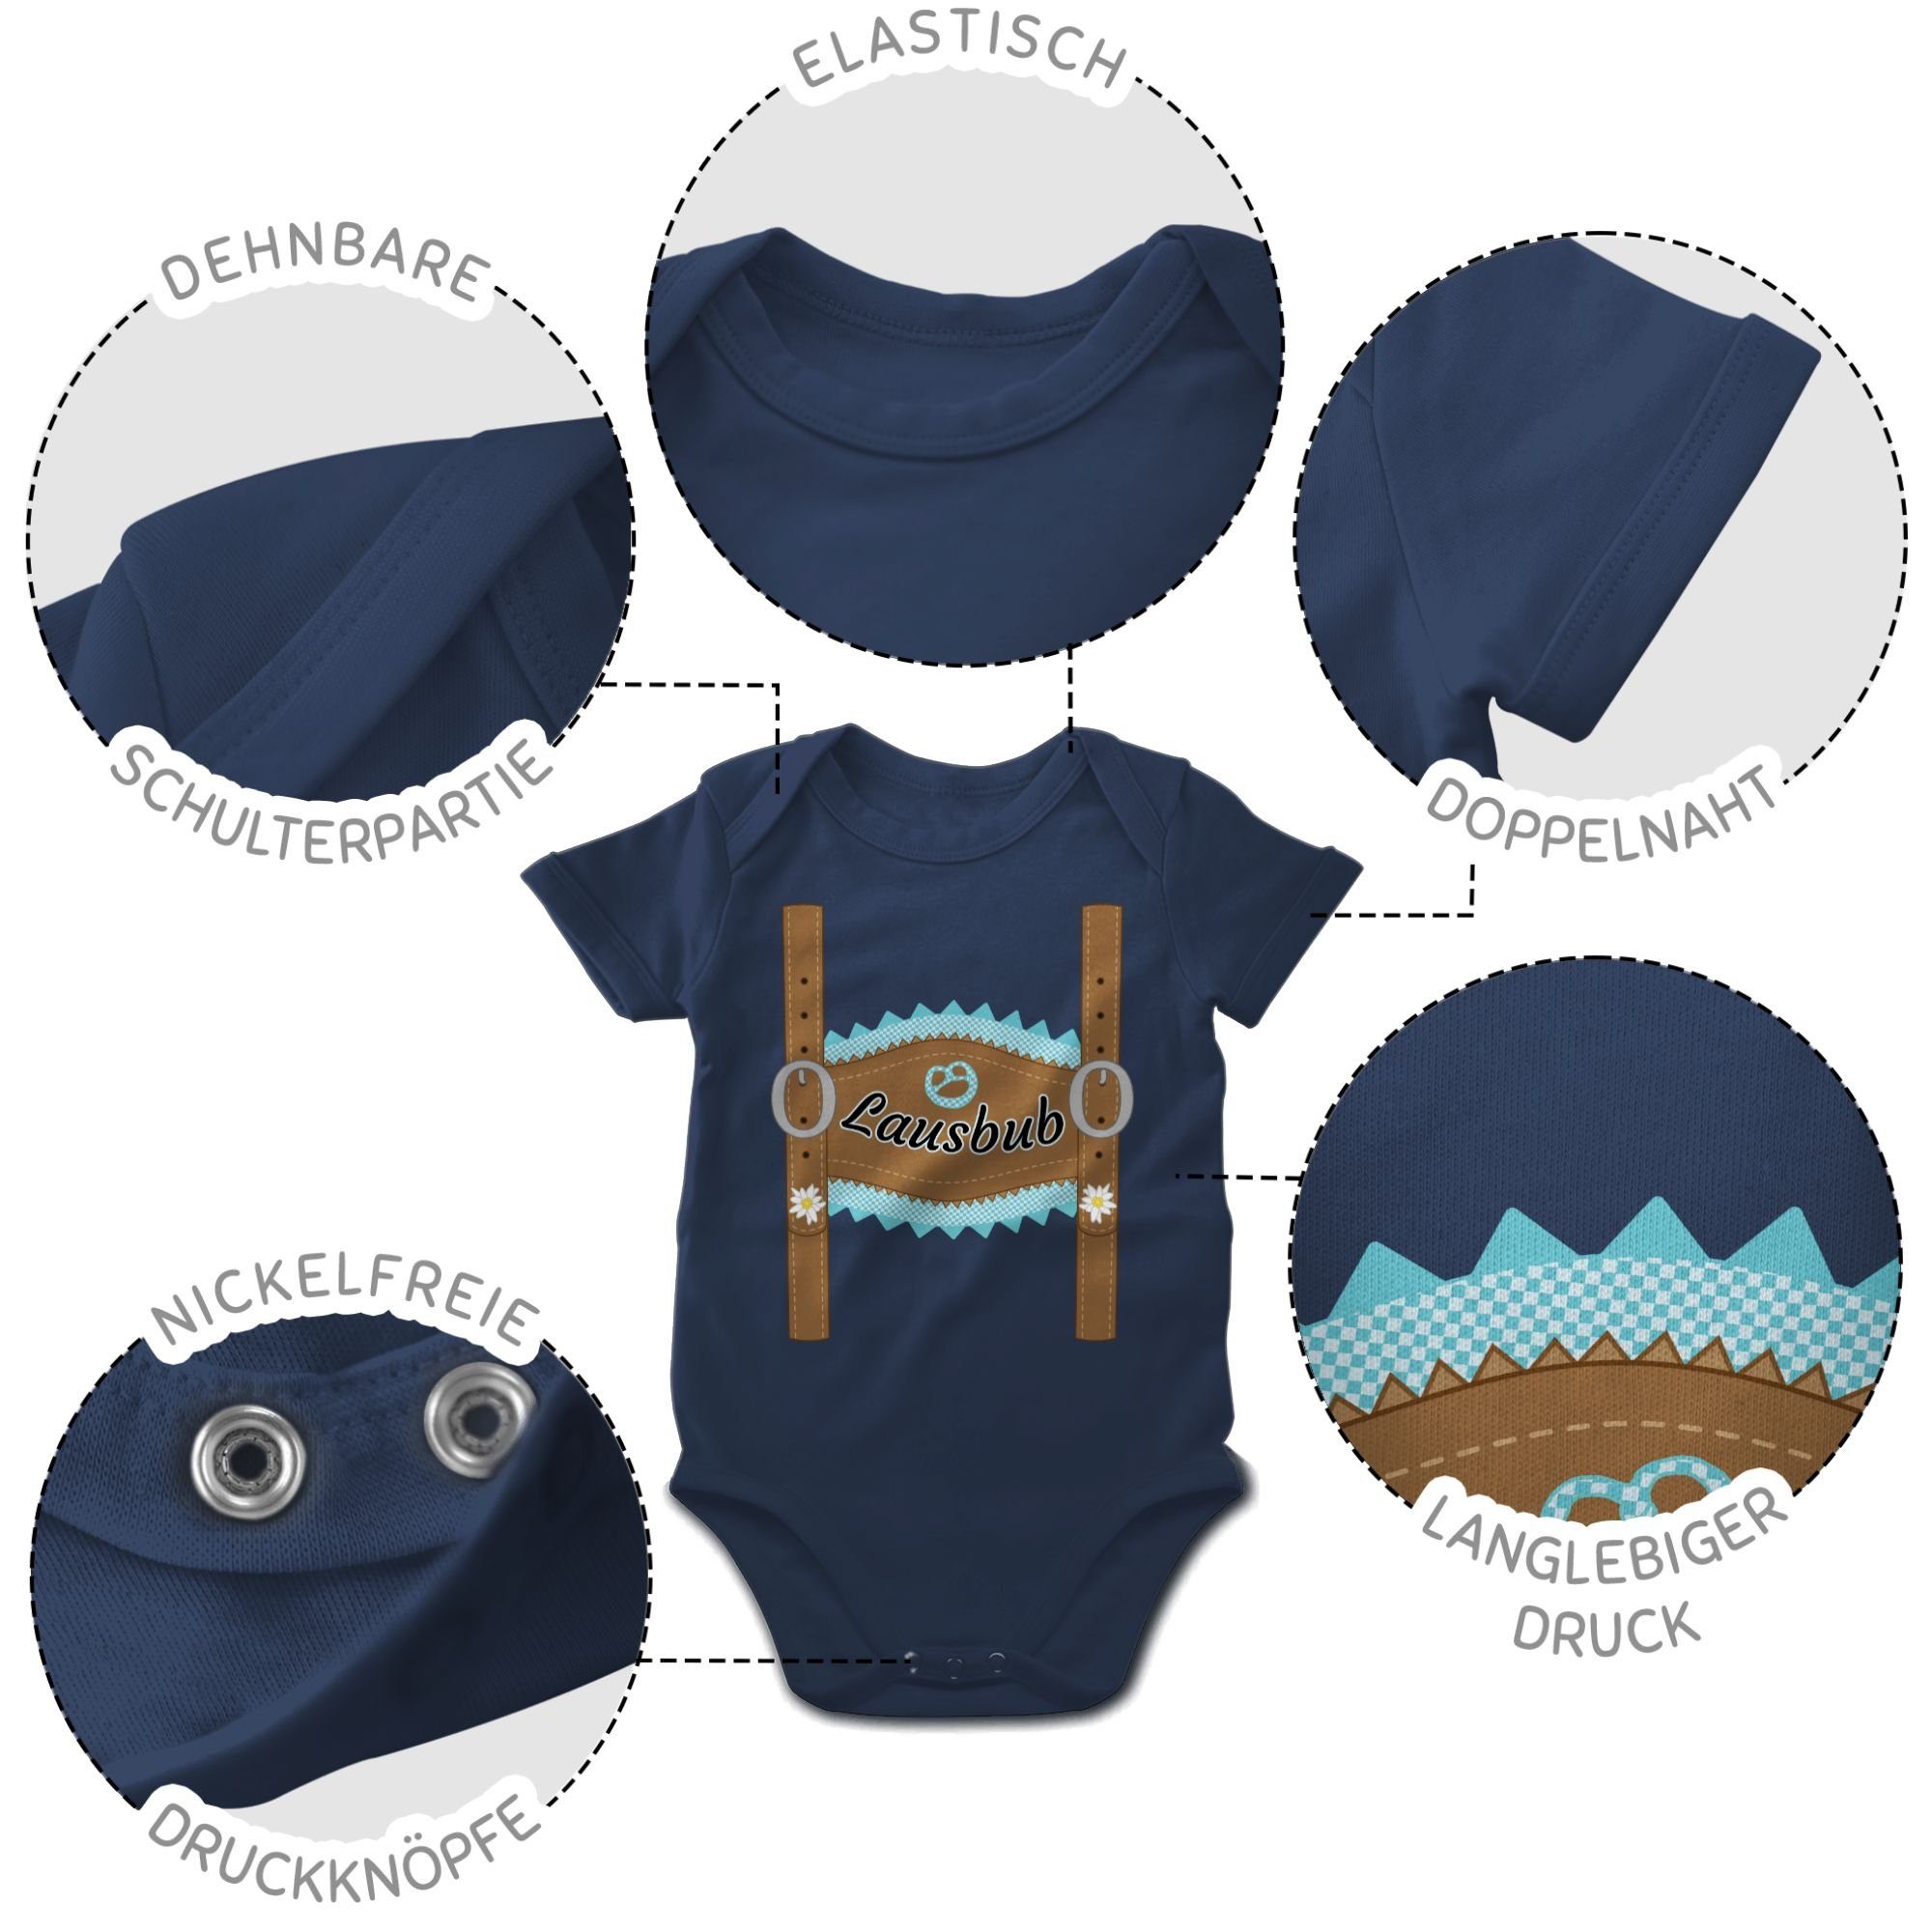 Shirtracer für Outfit Oktoberfest Lausbub Navy Baby Lederhose 1 Mode Blau Shirtbody